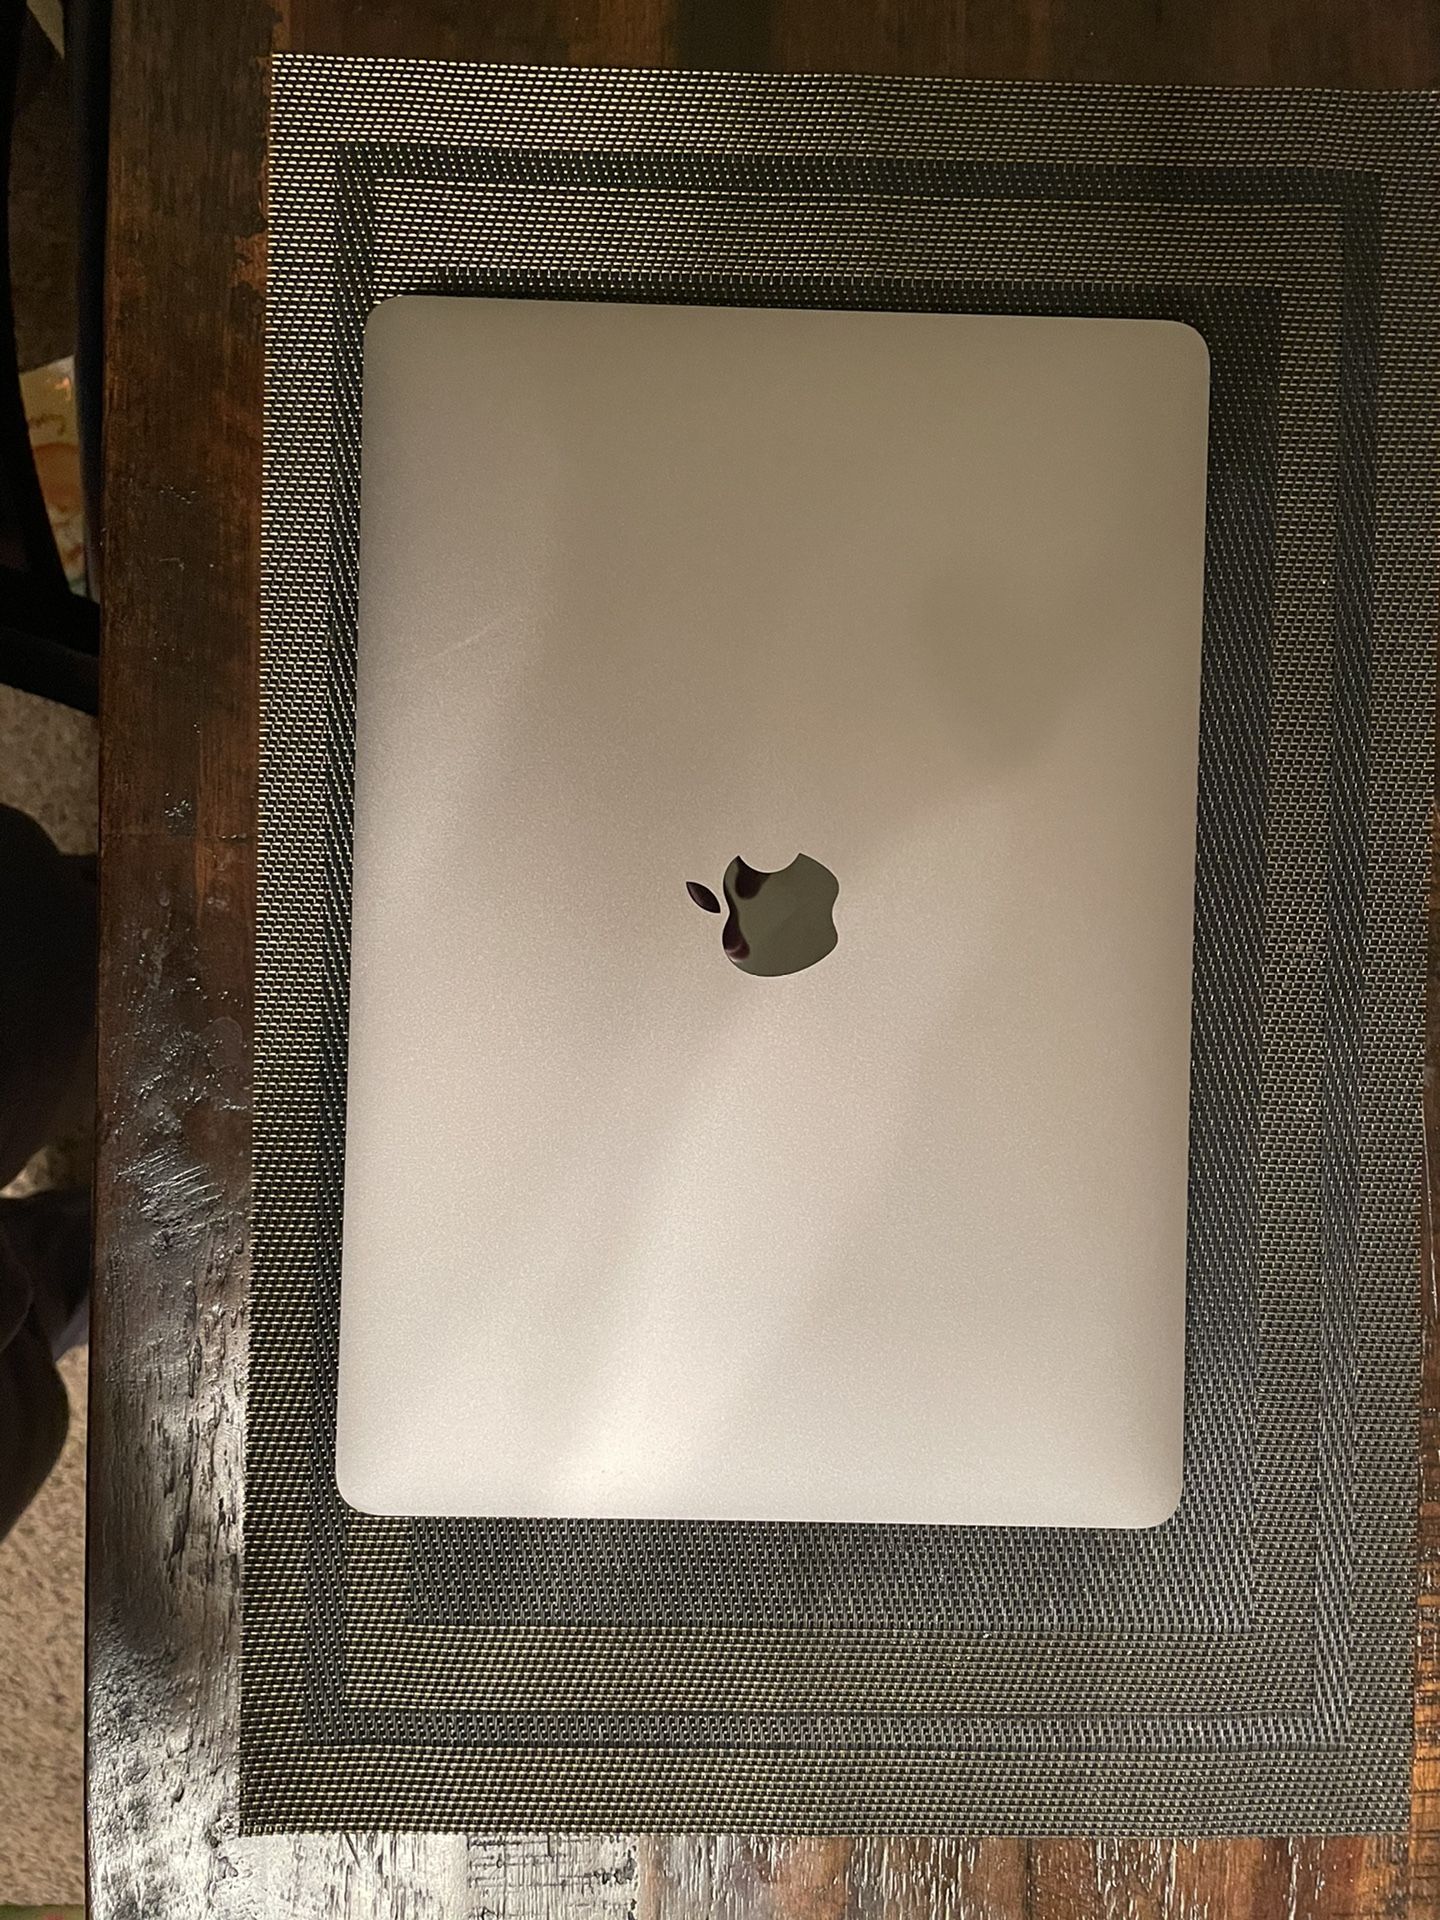 MacBook Pro (Excellent Condition)